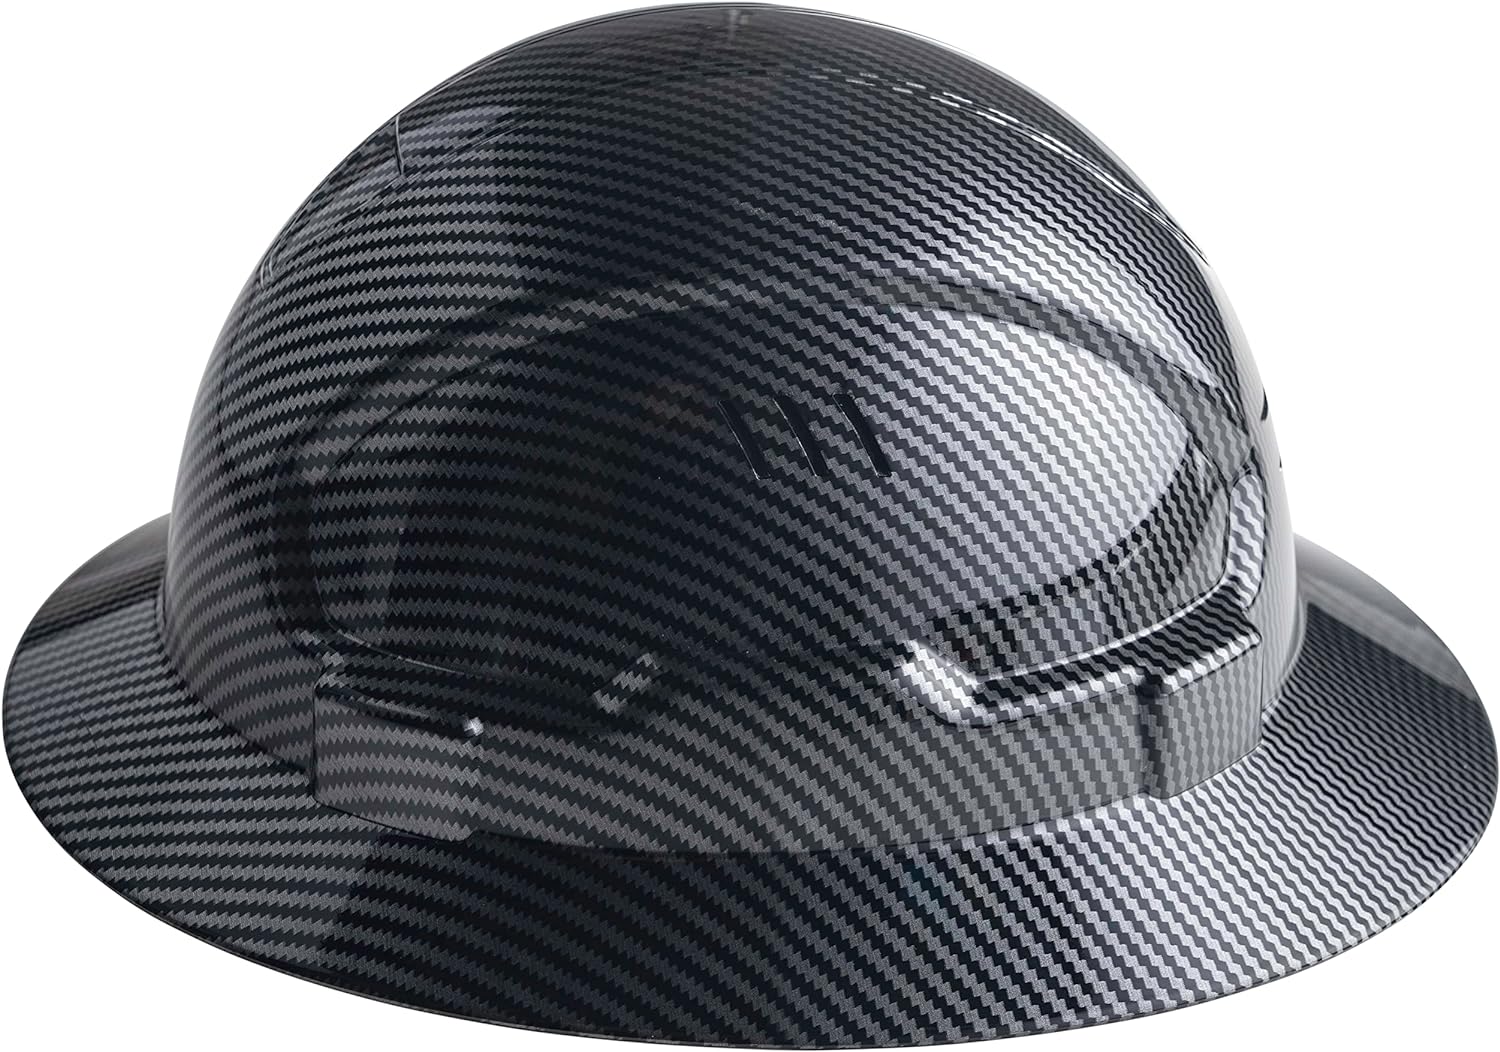 Ridgerock Hard Hat Construction OSHA Approved Vented Full Brim Safety Helmet Carbon Fiber Design Hard Hats, Cascos De Construccion Work H